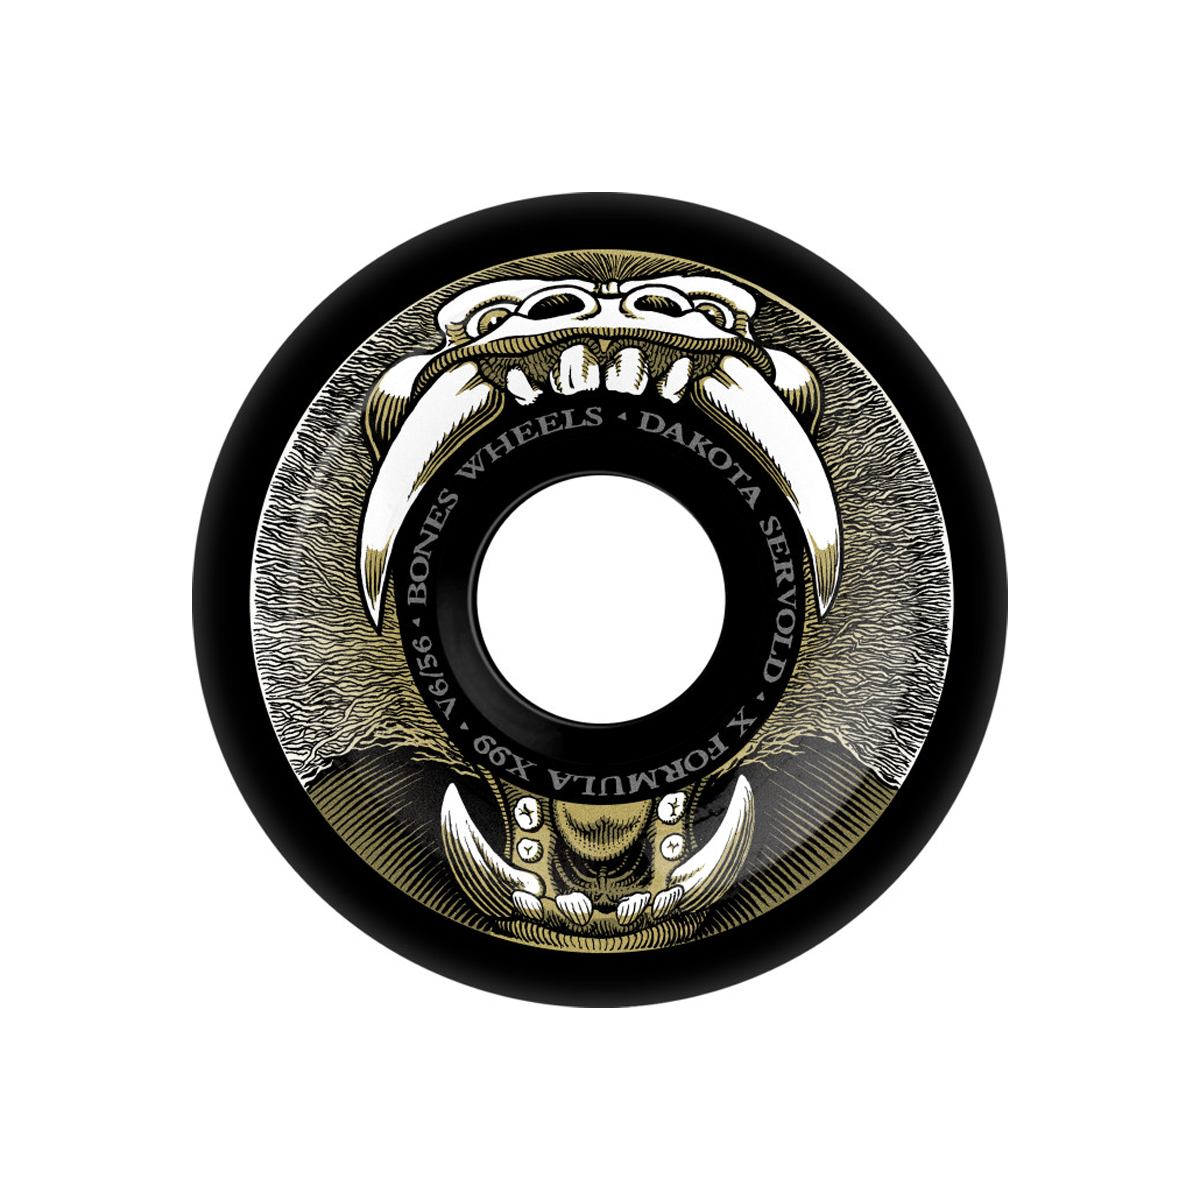 Bones X-Formula Servold Bamboonatic V6 Widecut Skate Wheels 99a Black - Assorted Sizes